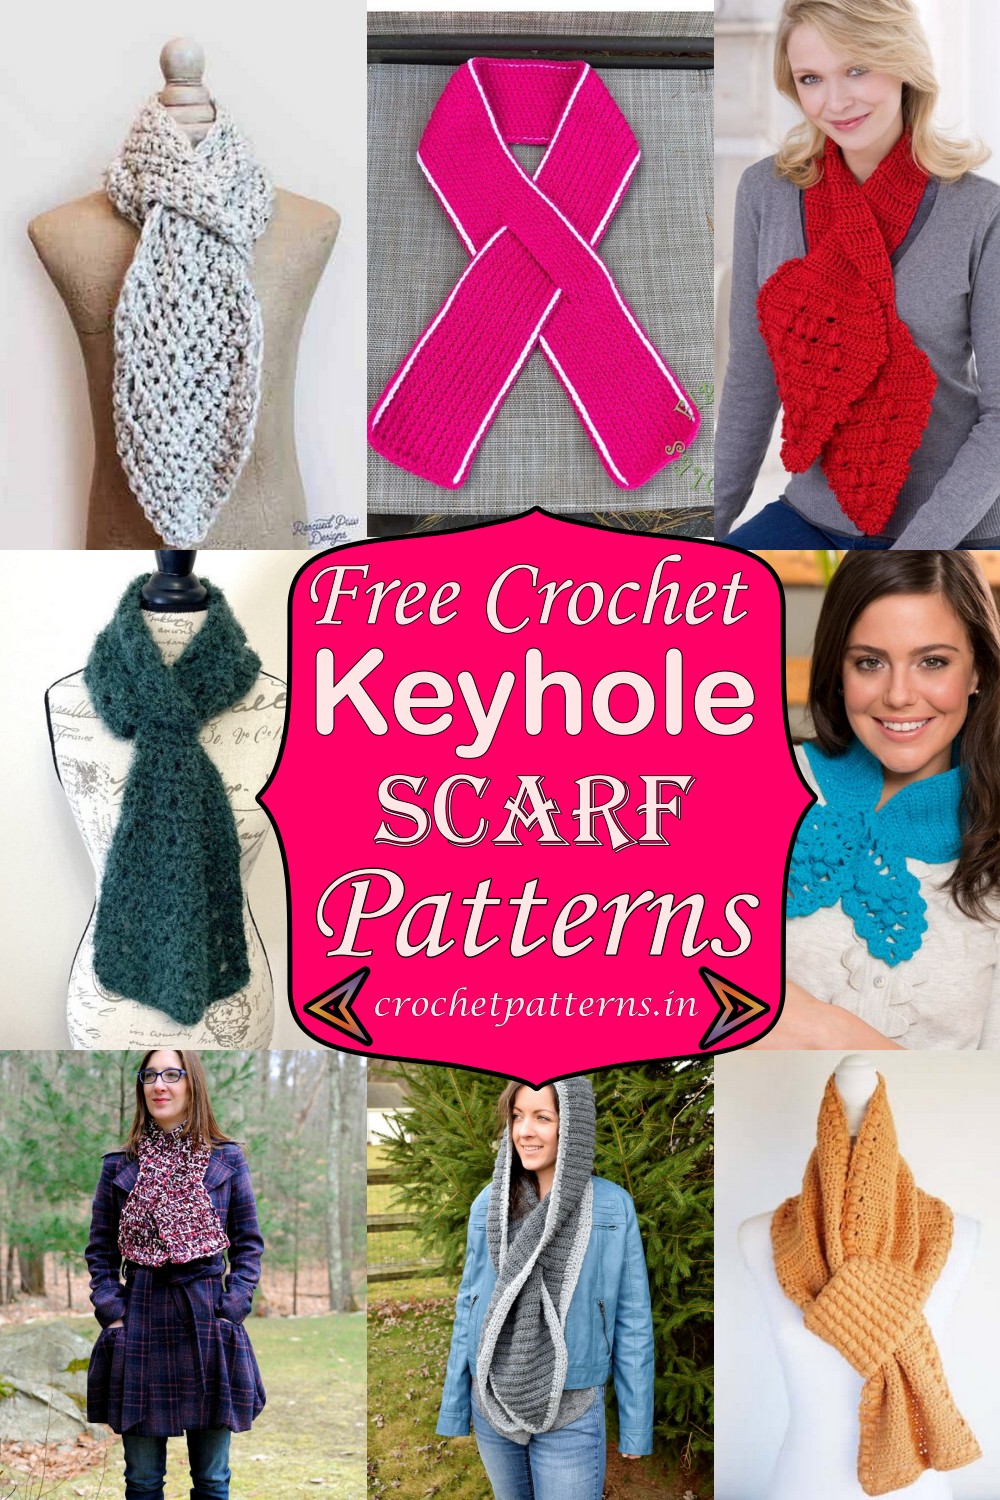 Free Crochet Keyhole Scarf Patterns